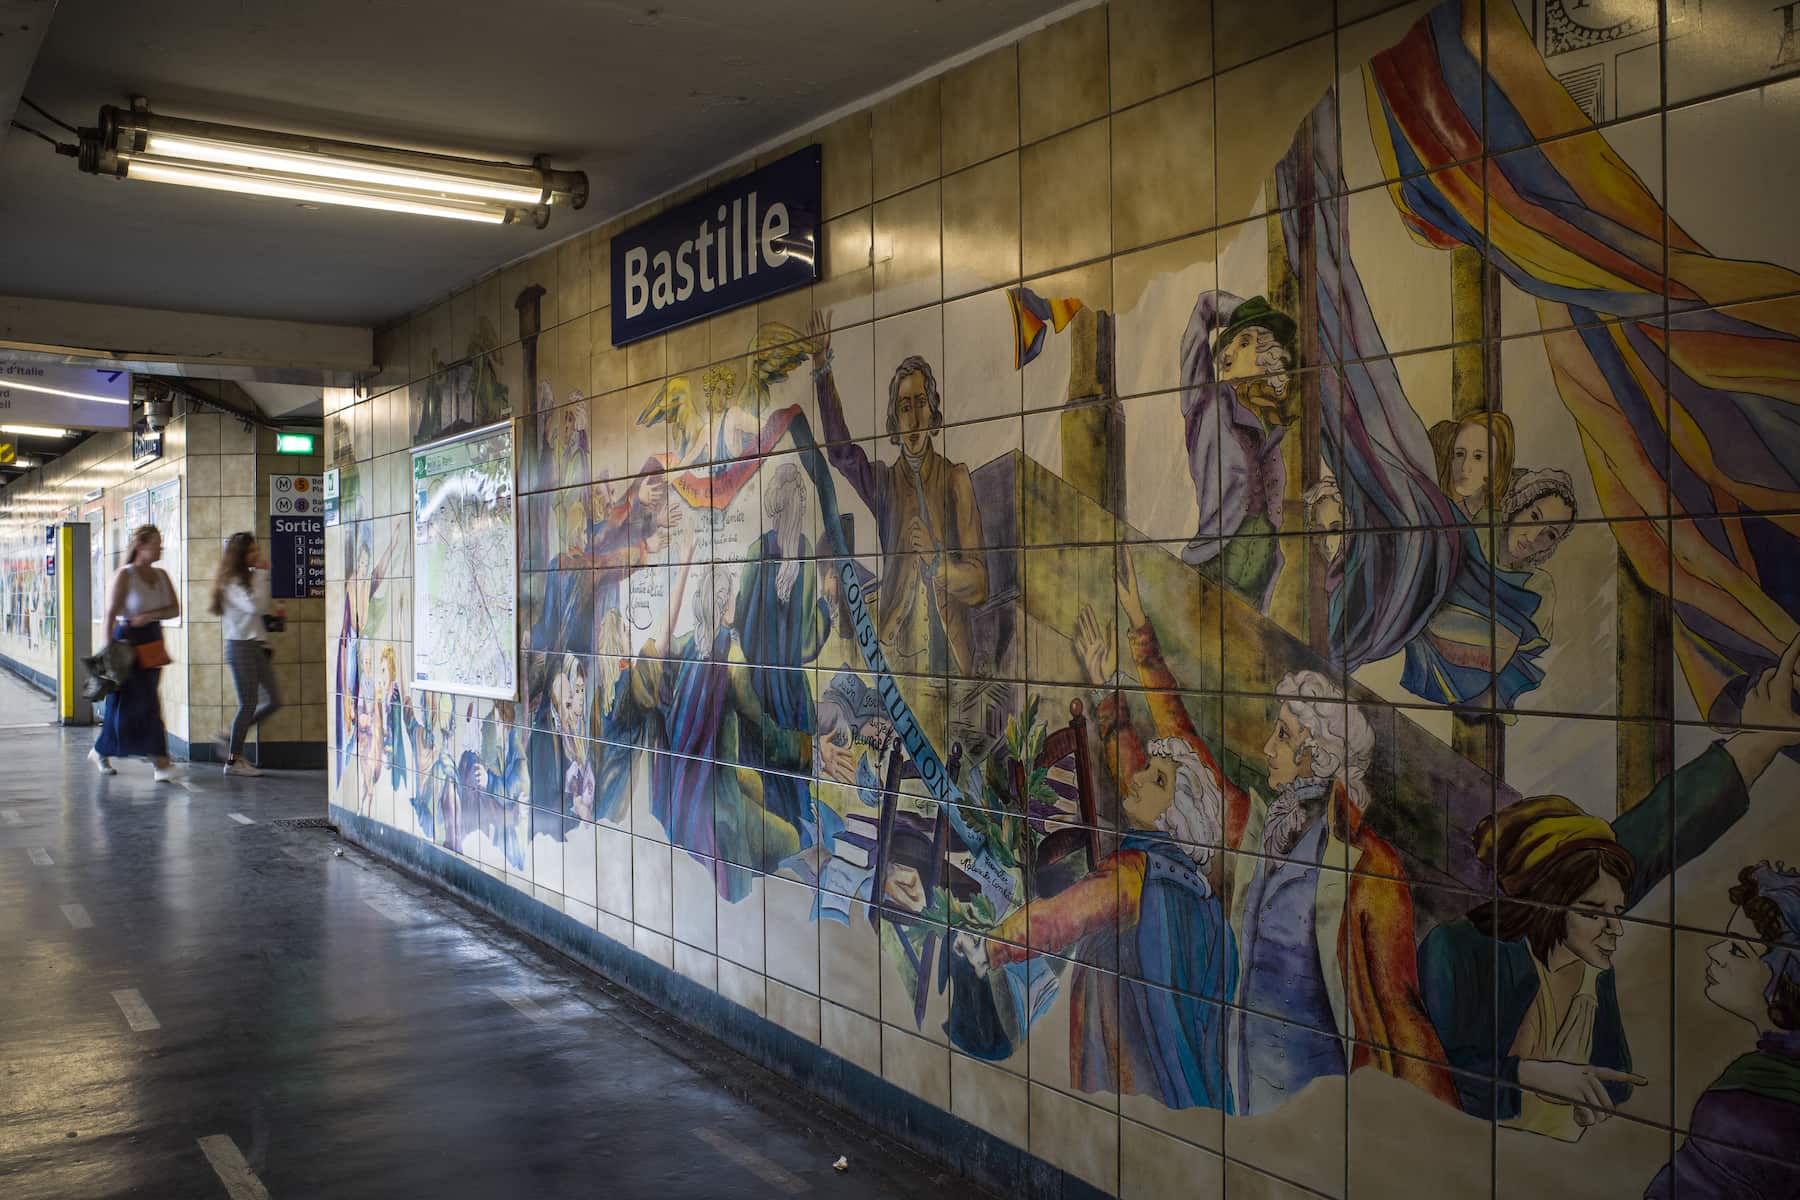 Station Métro Bastille in Paris